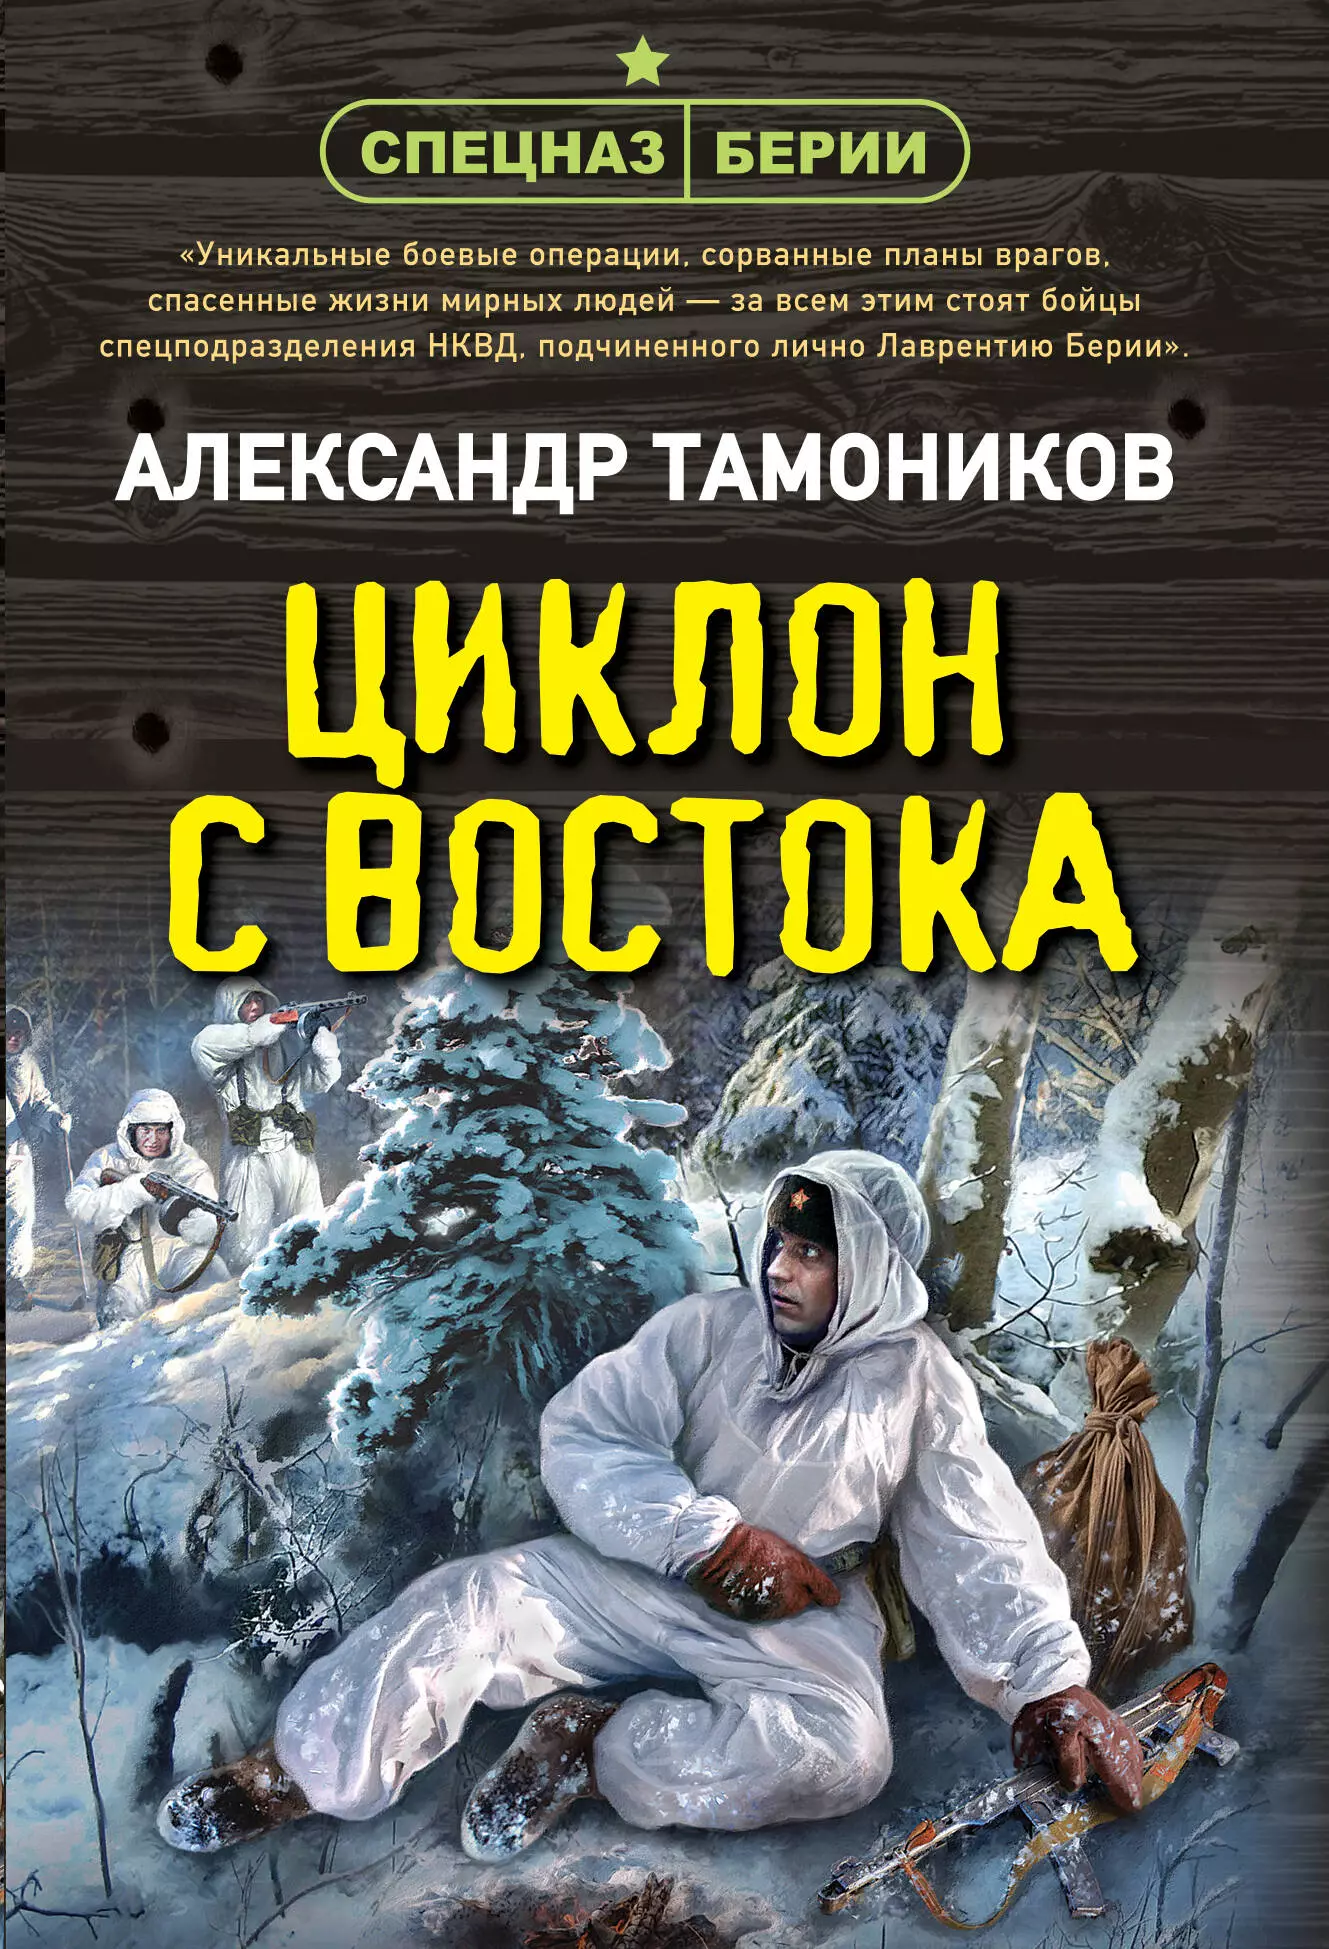 Тамоников Александр Александрович - Циклон с востока